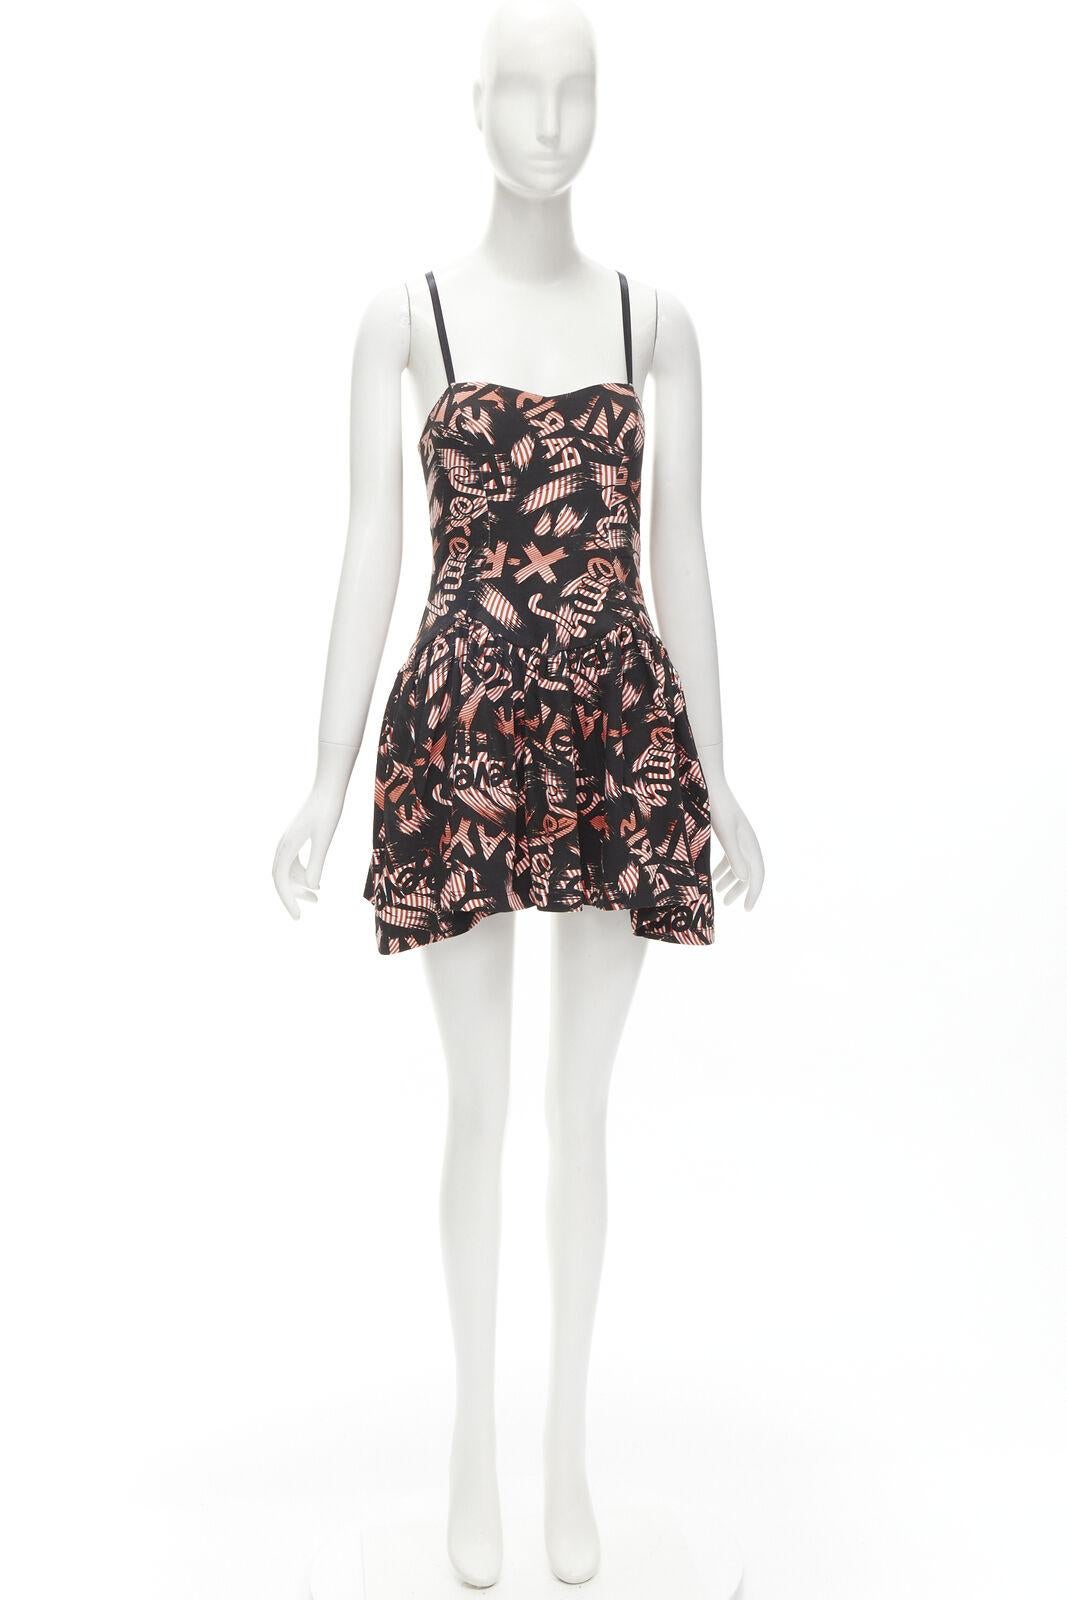 JEREMY SCOTT orange X-ray New York City Names strappy mini dress For Sale 4